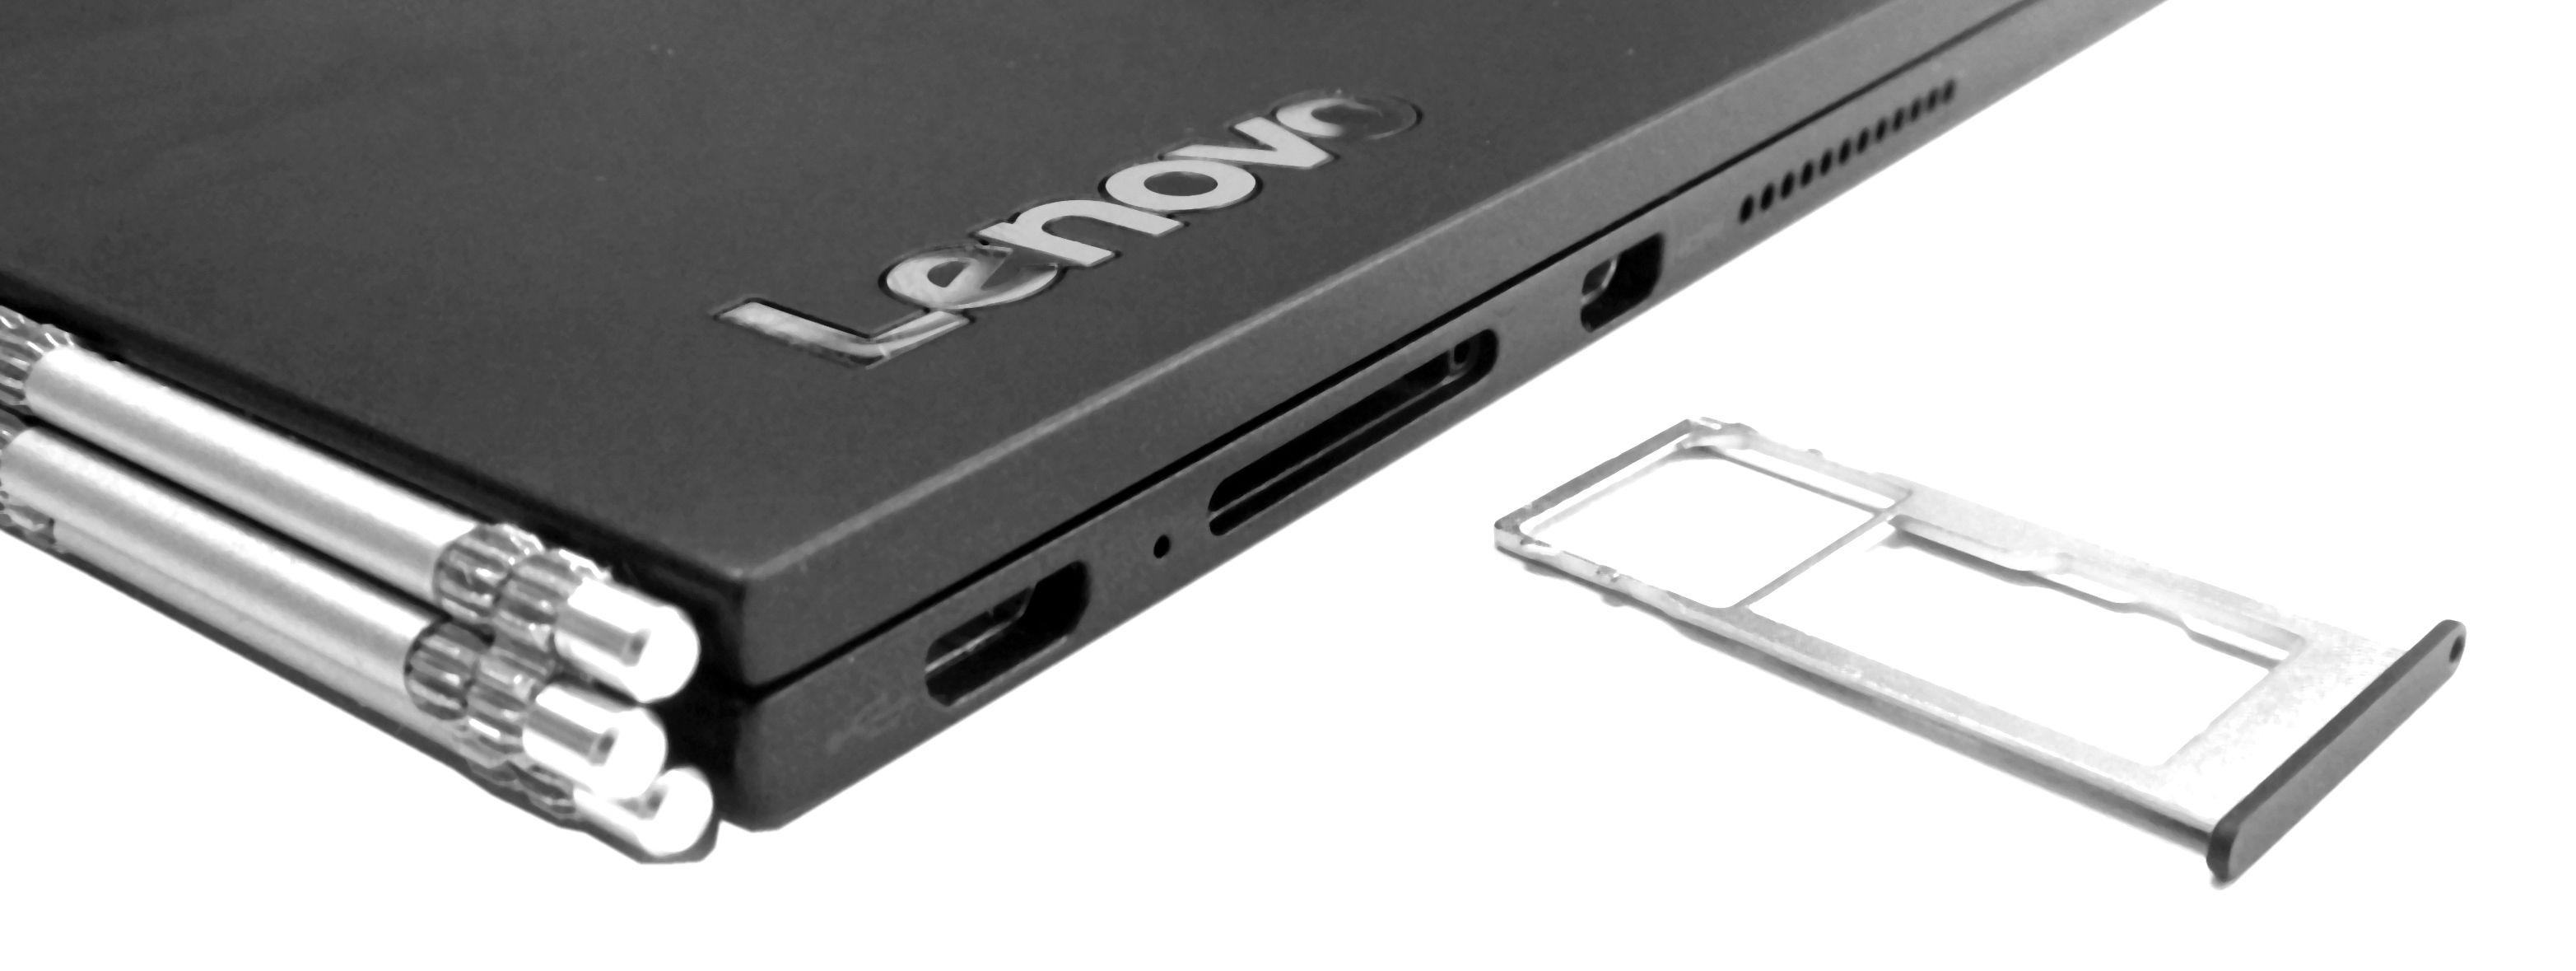 Test: Lenovo Yoga Book YB1-X91L - neuartiges 2-in-1-Tablet mit Real Pen